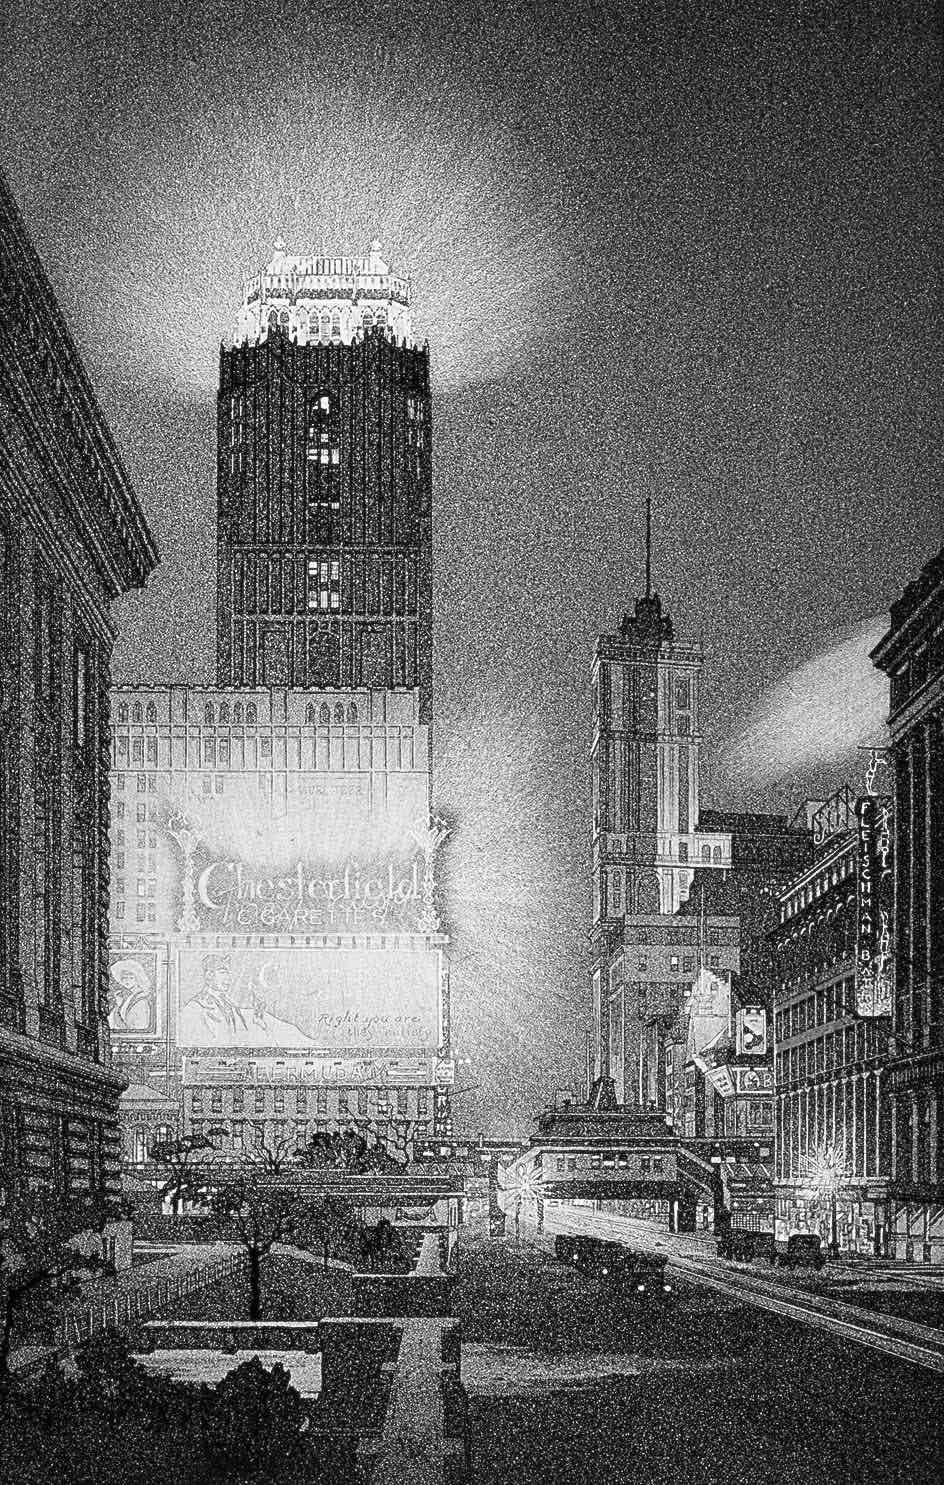 a John Taylor Arms illustration of city lights at night, 1920s?